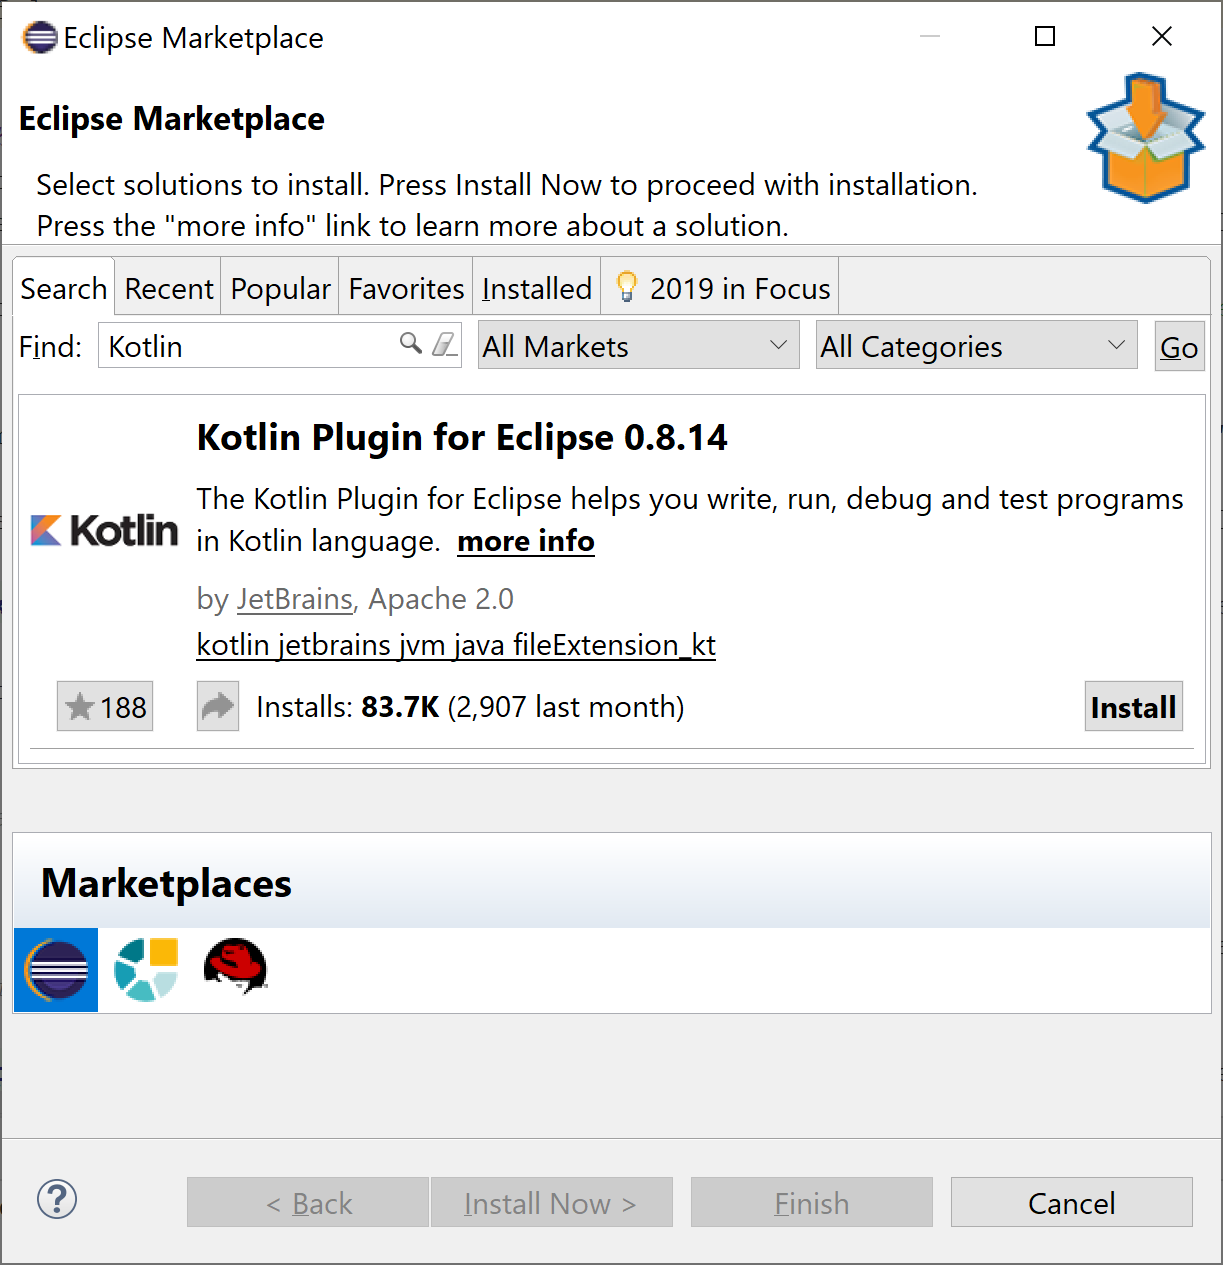 Eclipse Marketplace